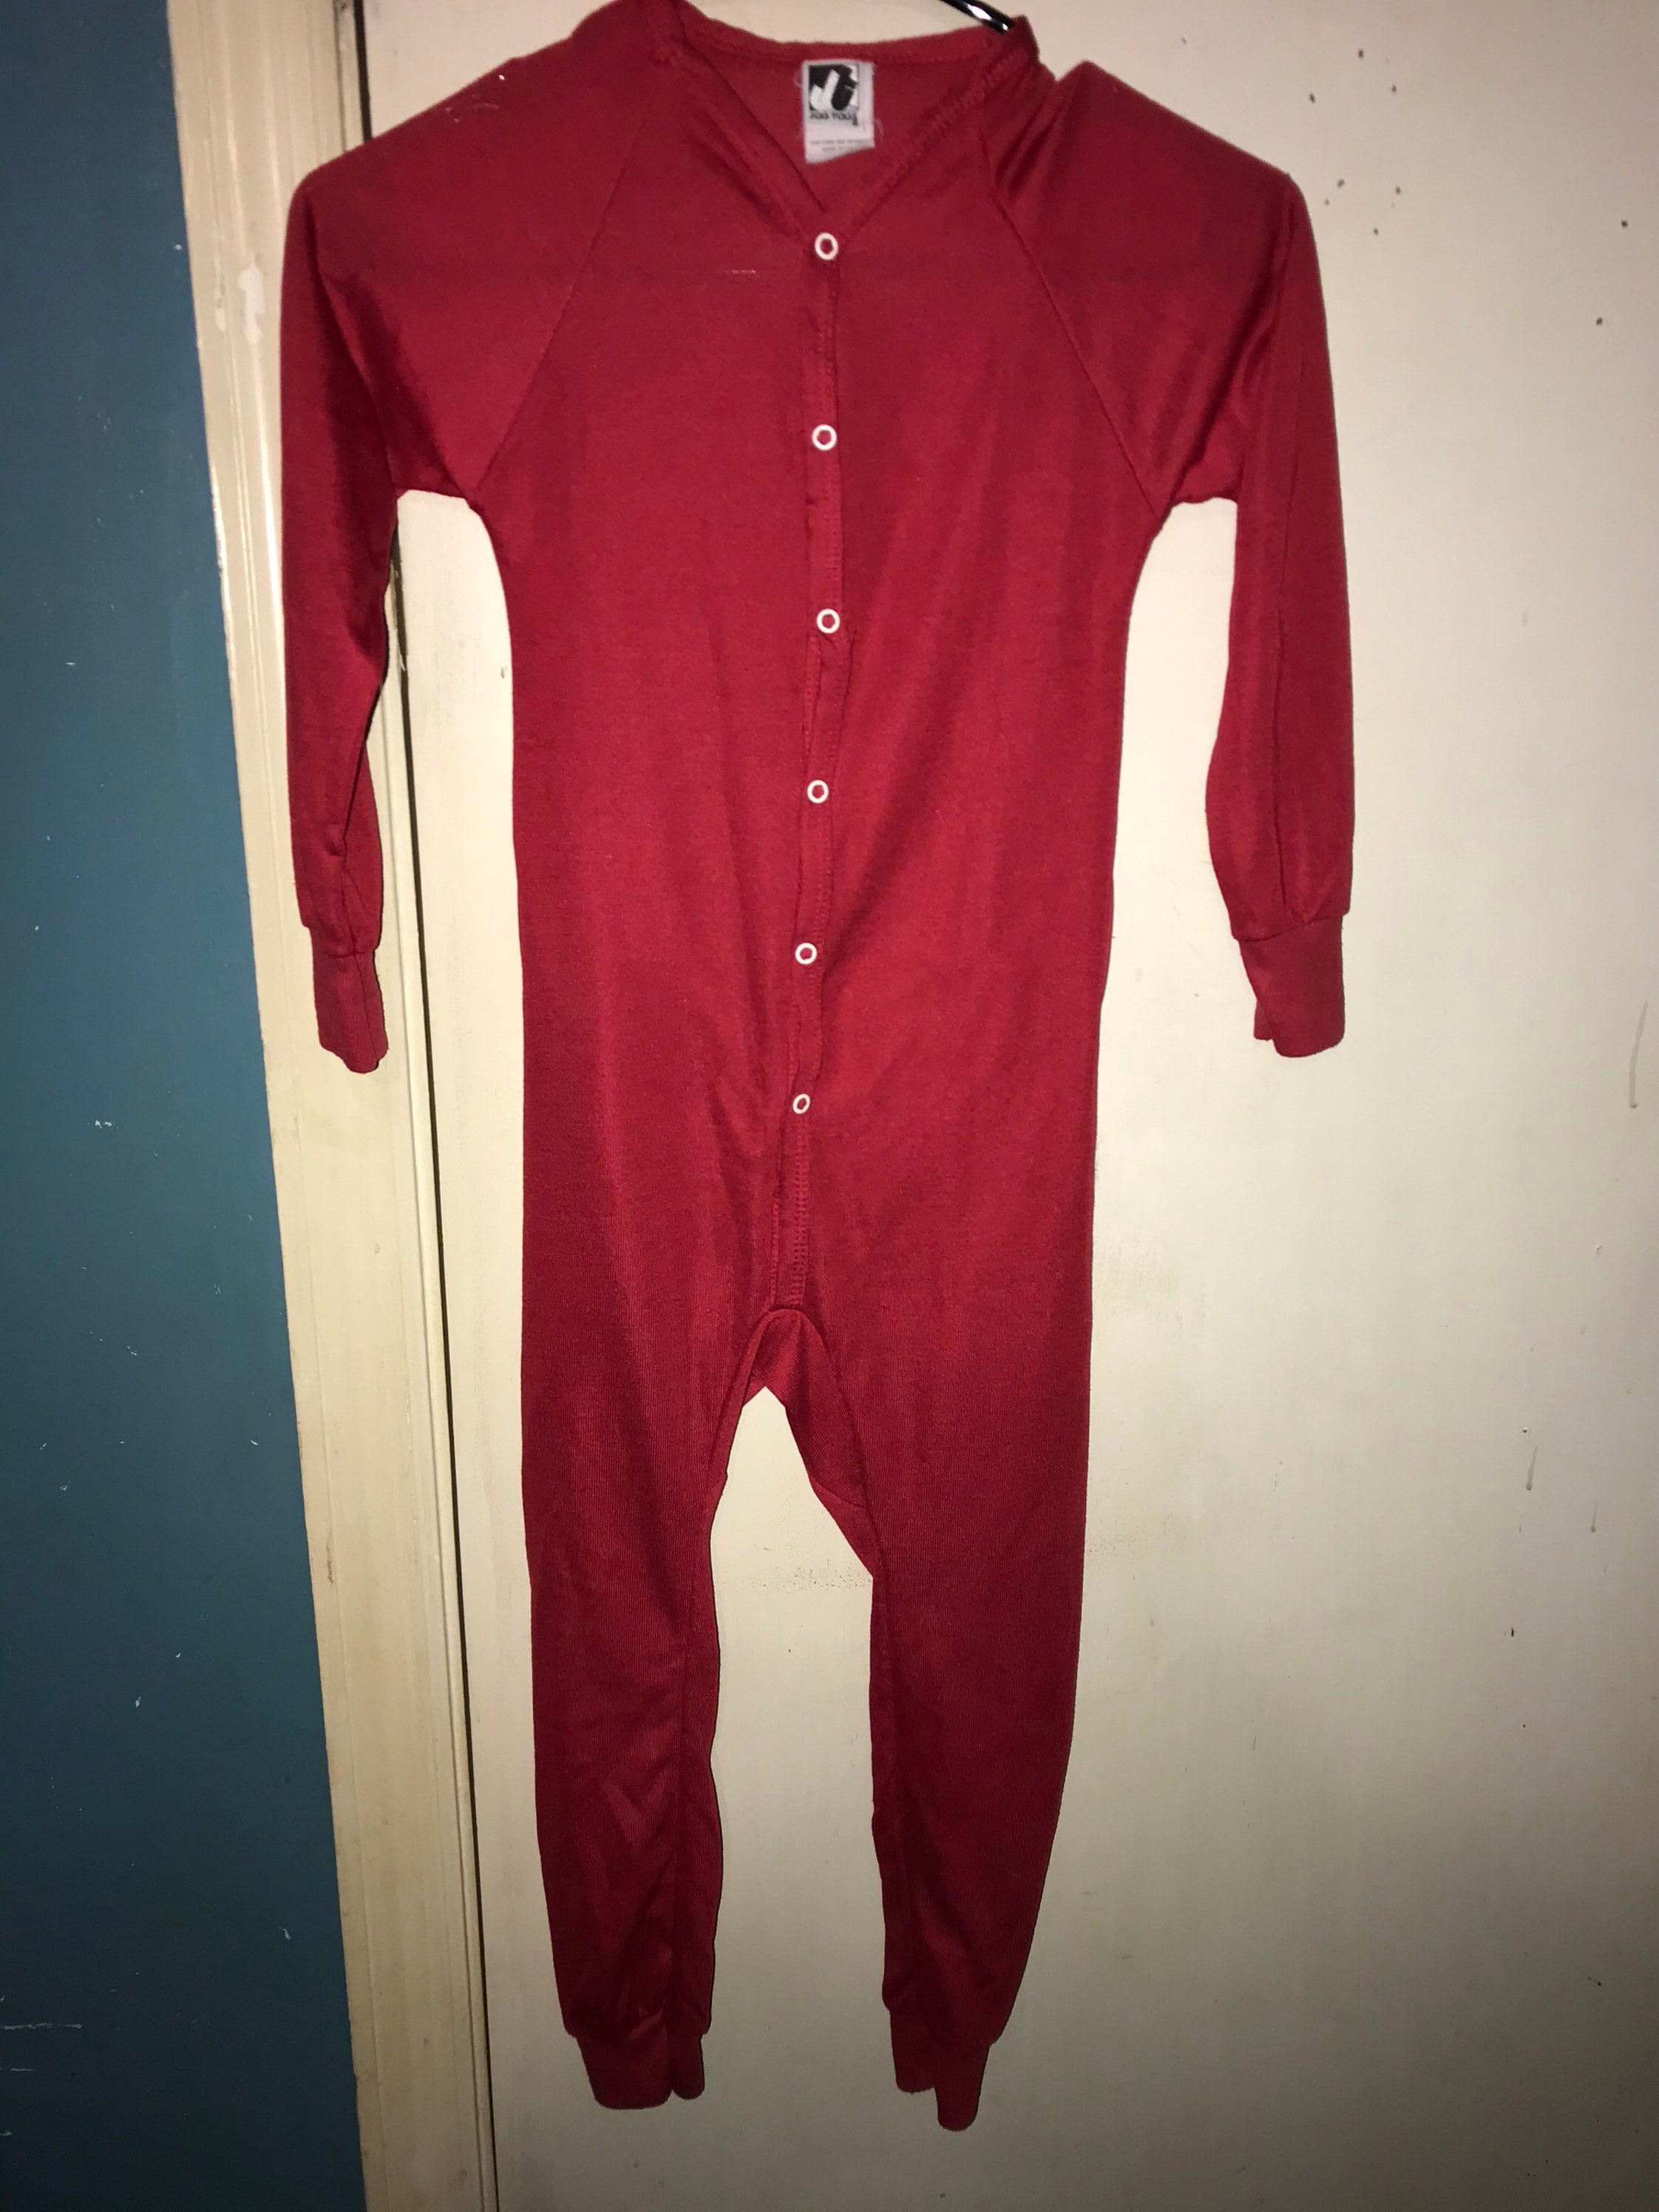 Vintage Kids Red Union Suit With Rear Butt Flap. Children's Cherry